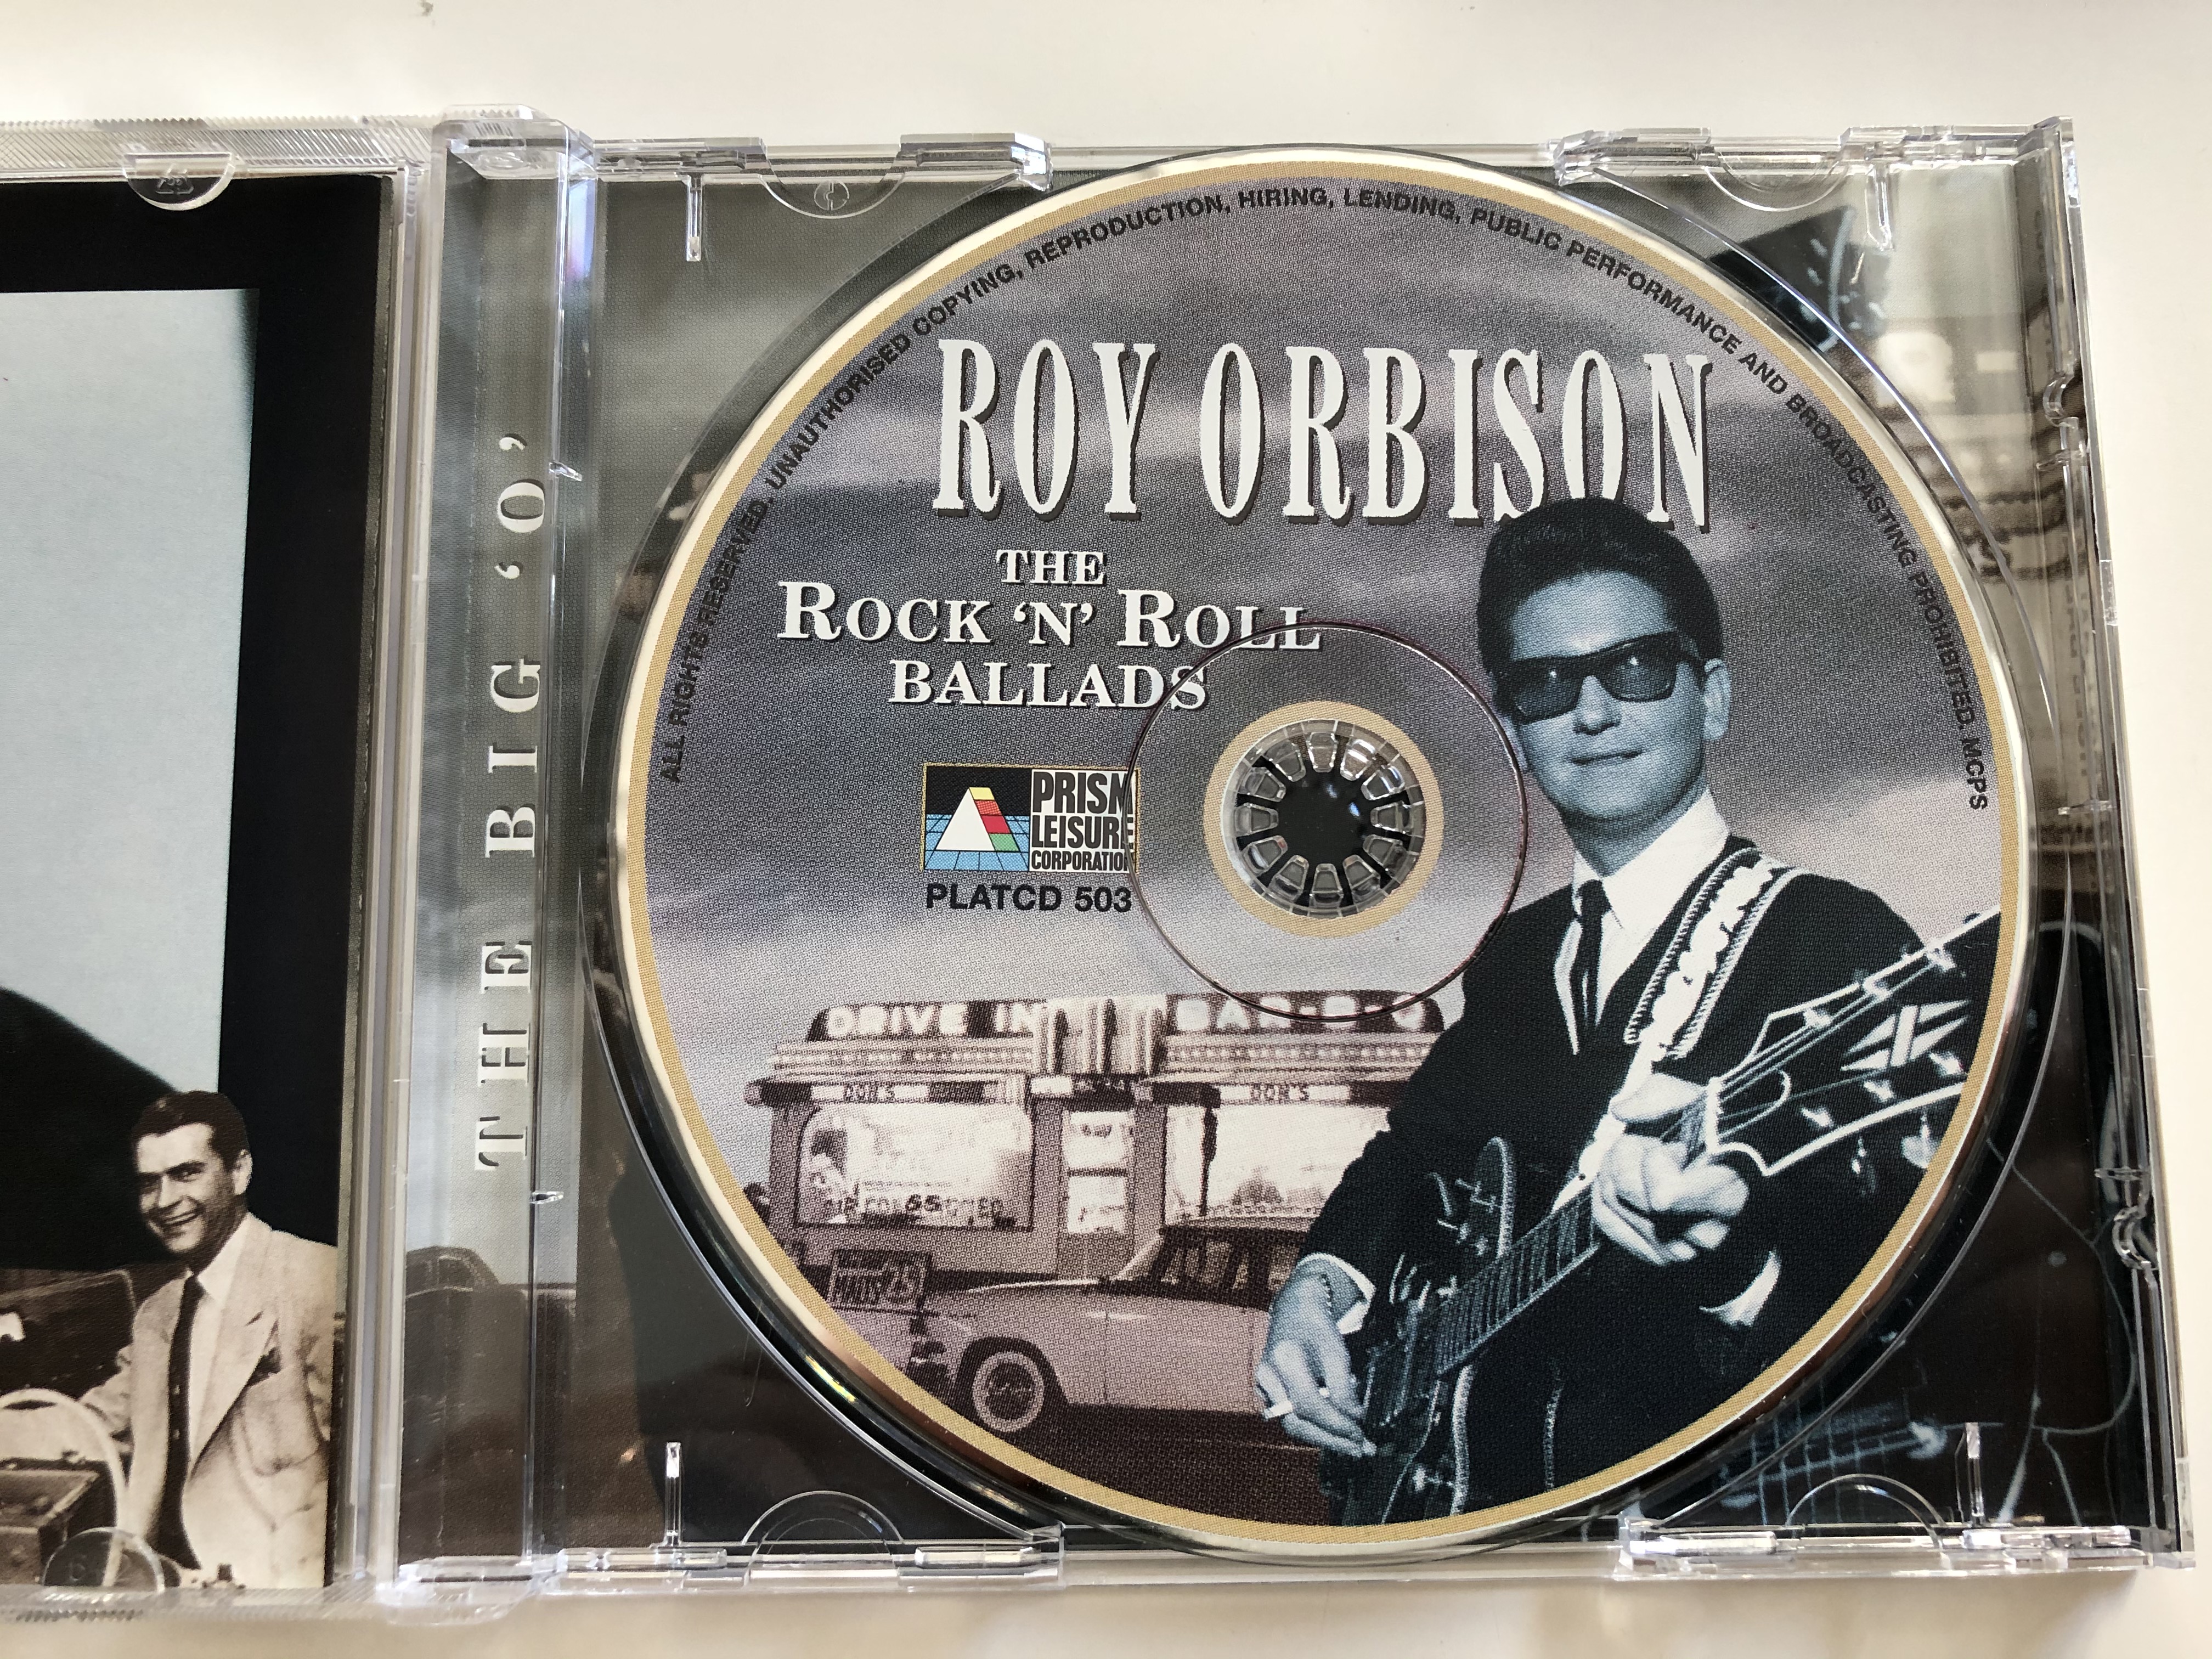 roy-orbison-the-rock-n-roll-ballads-featuring-claudette-ooby-dooby-go-go-go-prism-leisure-audio-cd-1999-platcd-503-4-.jpg